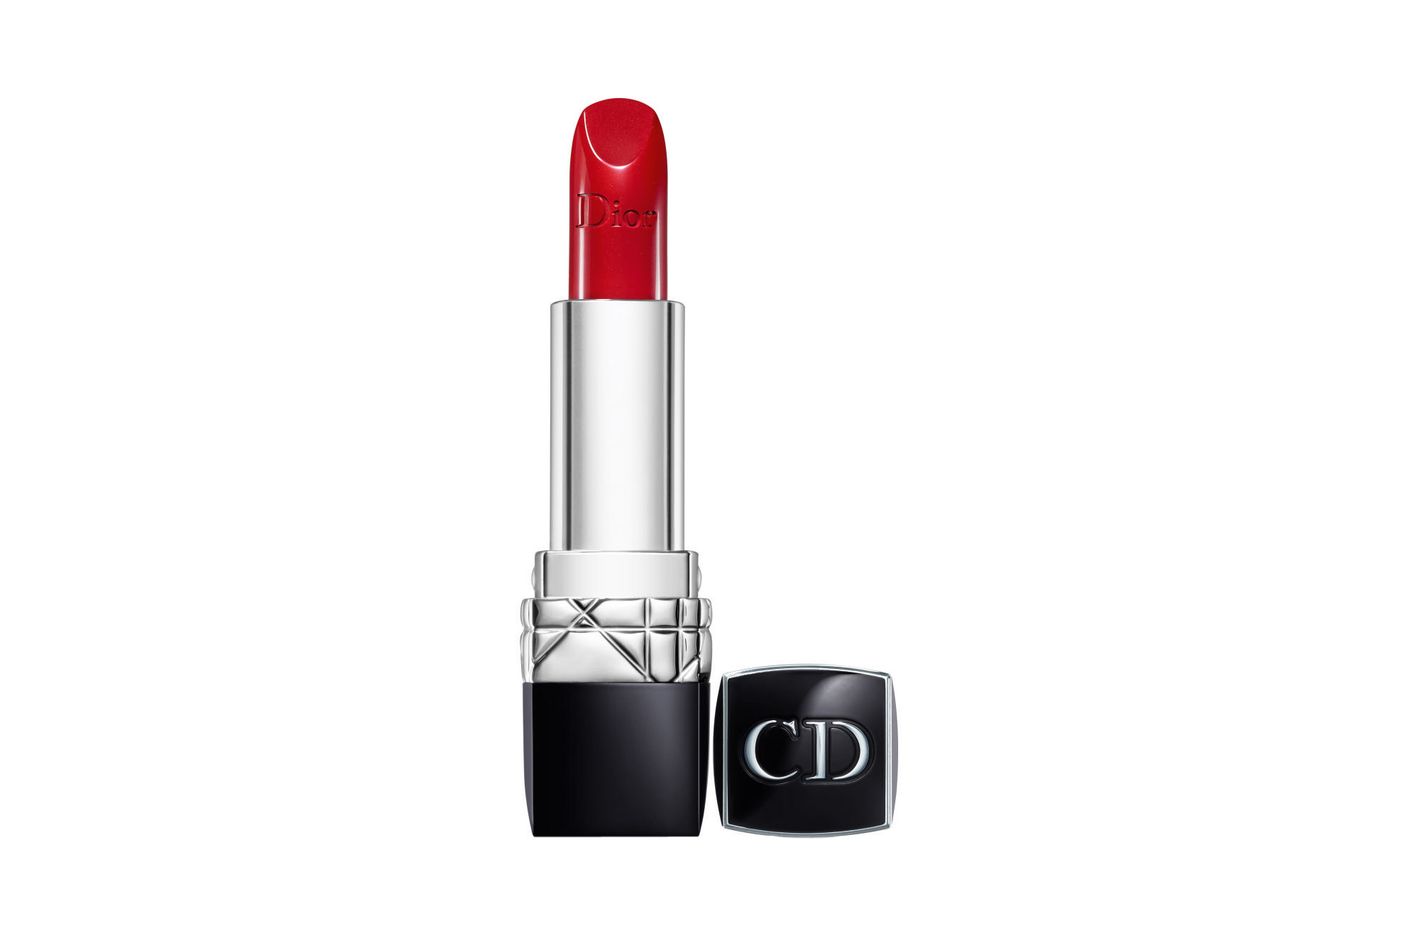 Mented Cosmetics Red Matte Lipstick - Red Carpet Deep Red, Long Lasting  Lipstick - Waterproof, Dark Red Lip Stain - Red Lipstick - Smudge proof  Matte